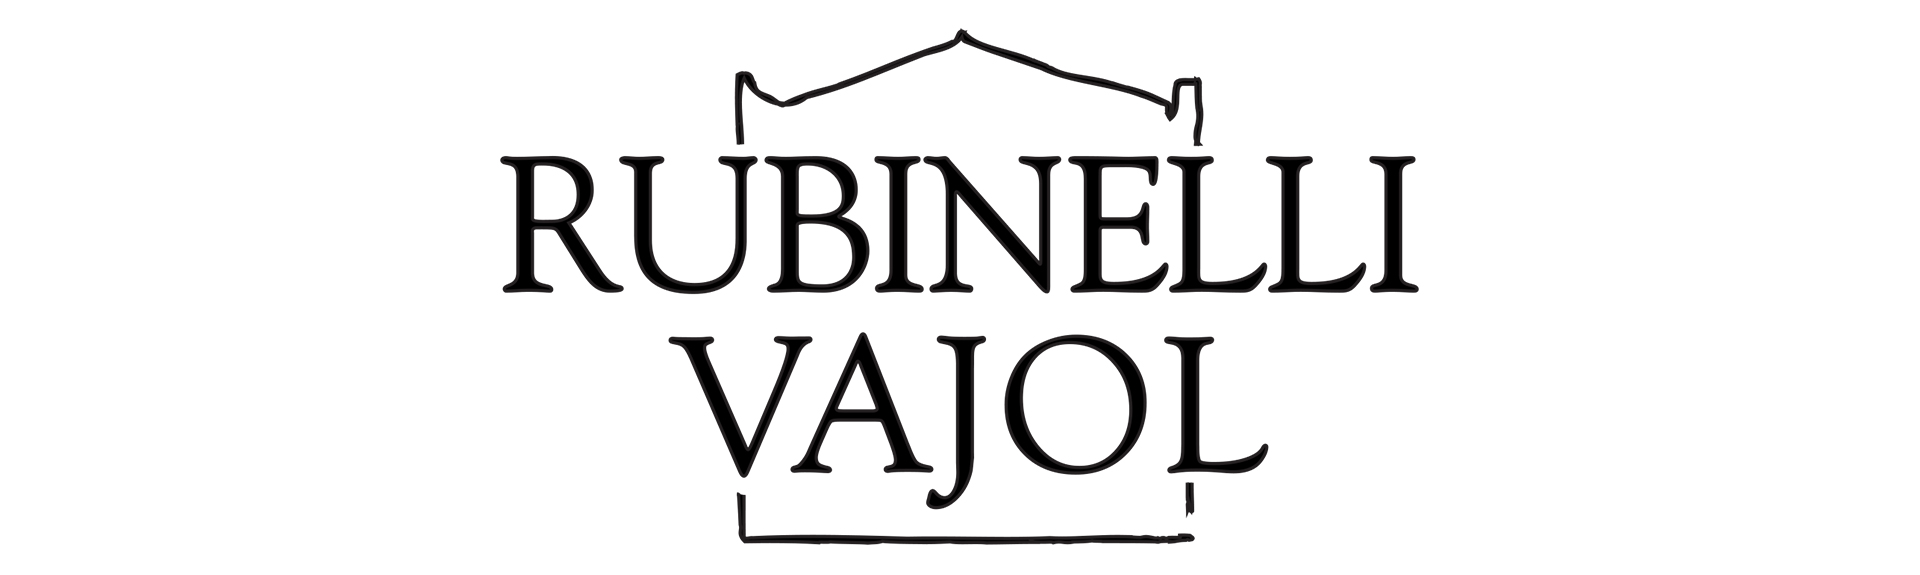 Rubinelli Vajol - Filosofia